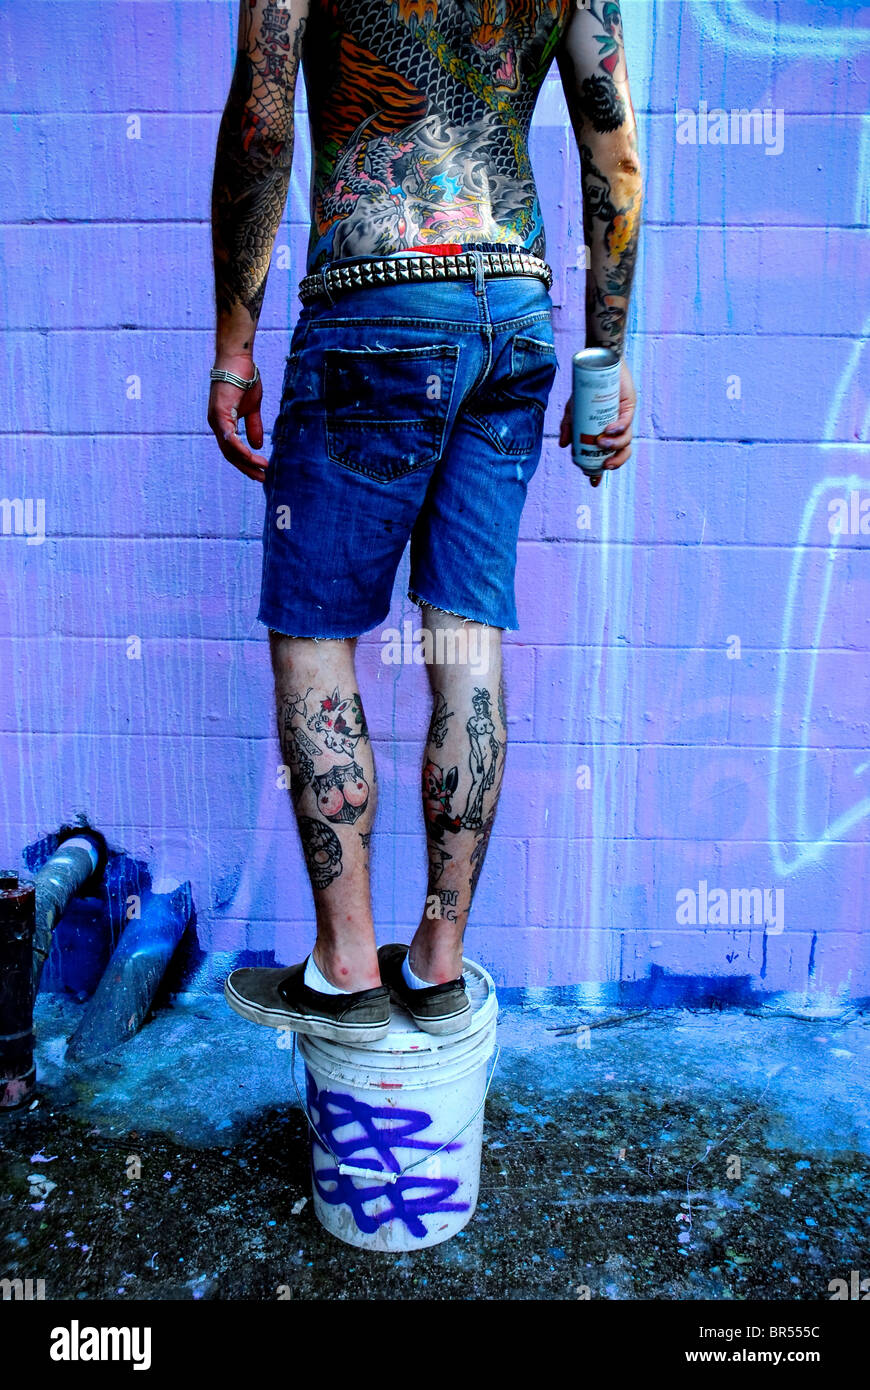 Graffiti artist with tattoos paints in Austin Texas. Stock Photo